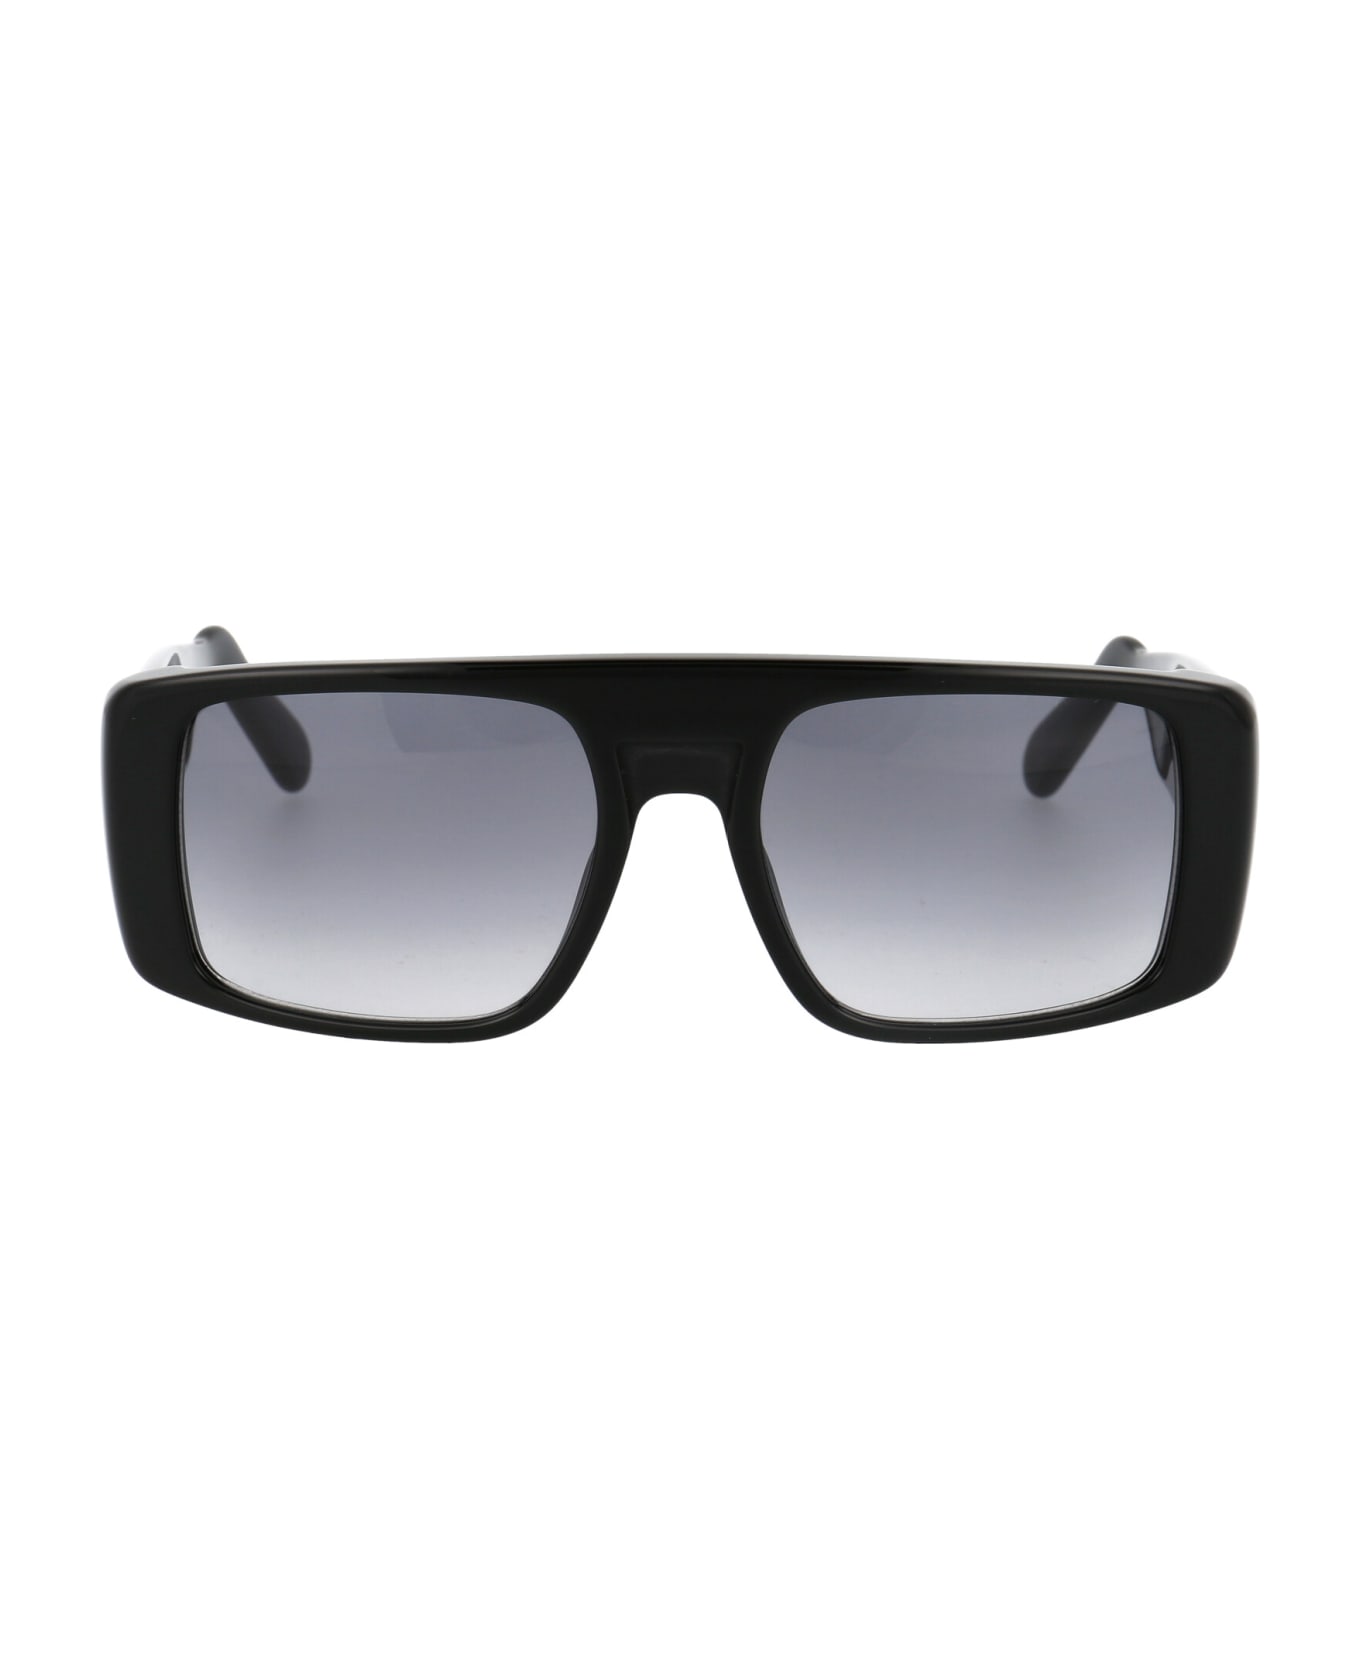 GCDS Gd0006 Sunglasses - 01B BLACK